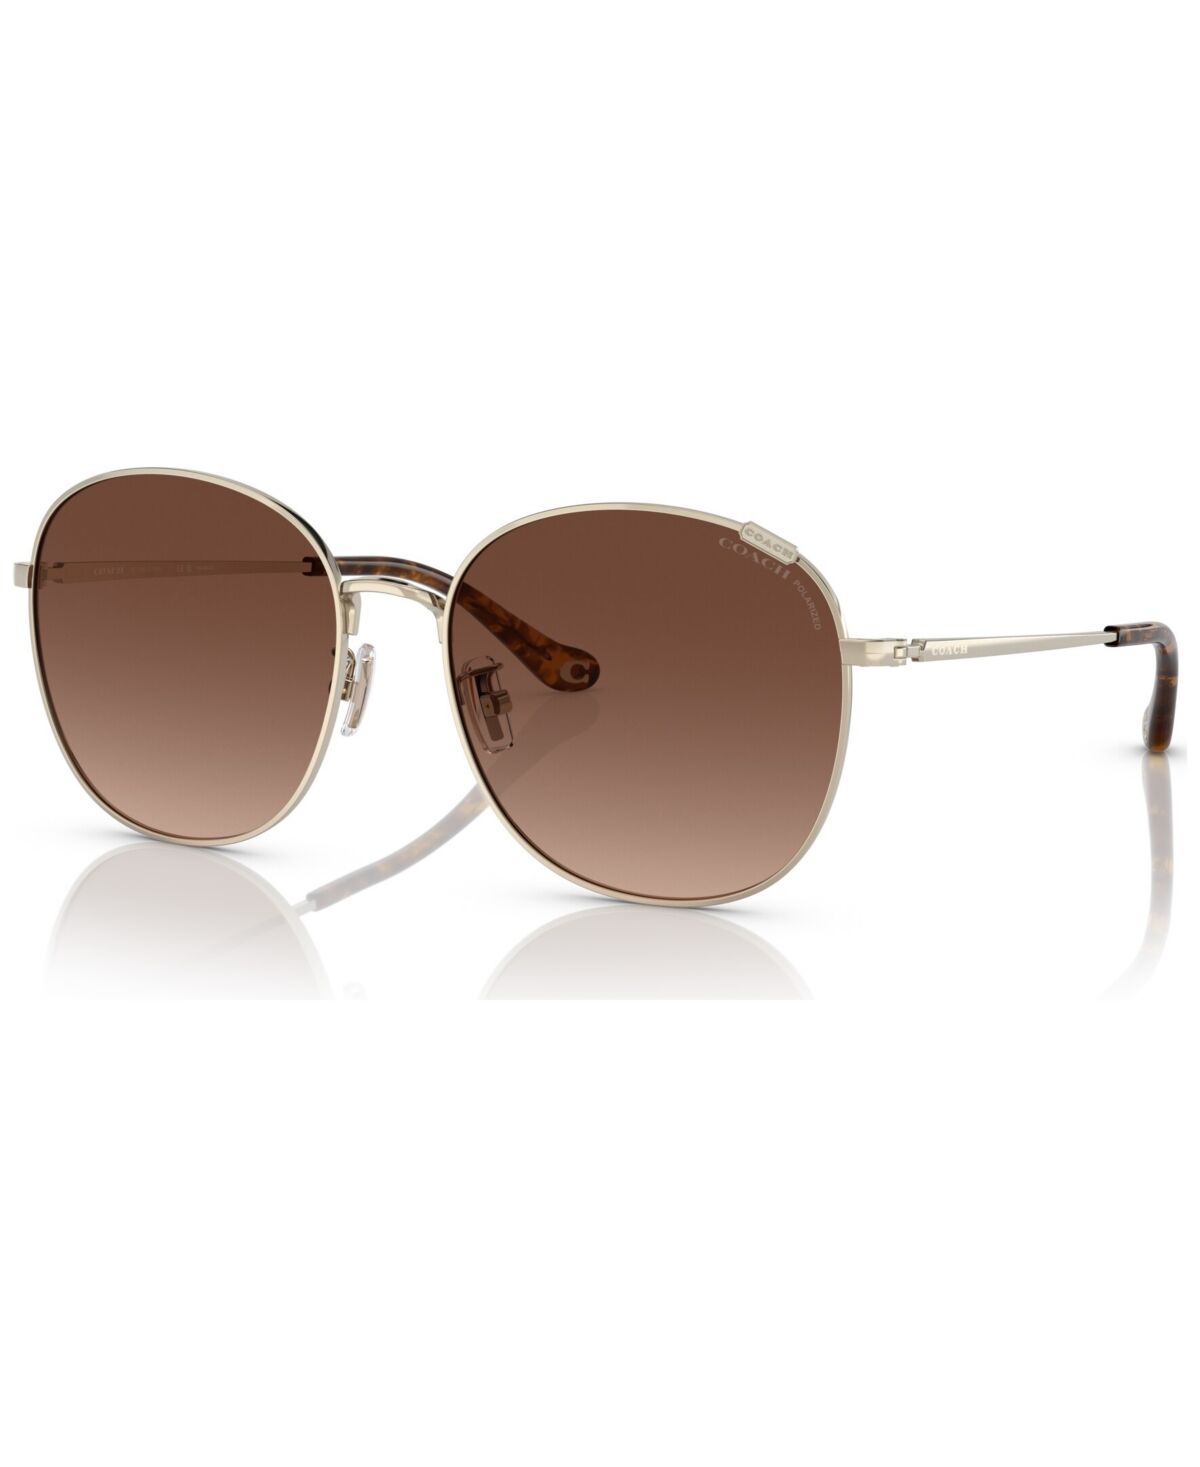 Coach Women's Polarized Sunglasses, C7996 - Shiny Light Gold-Tone